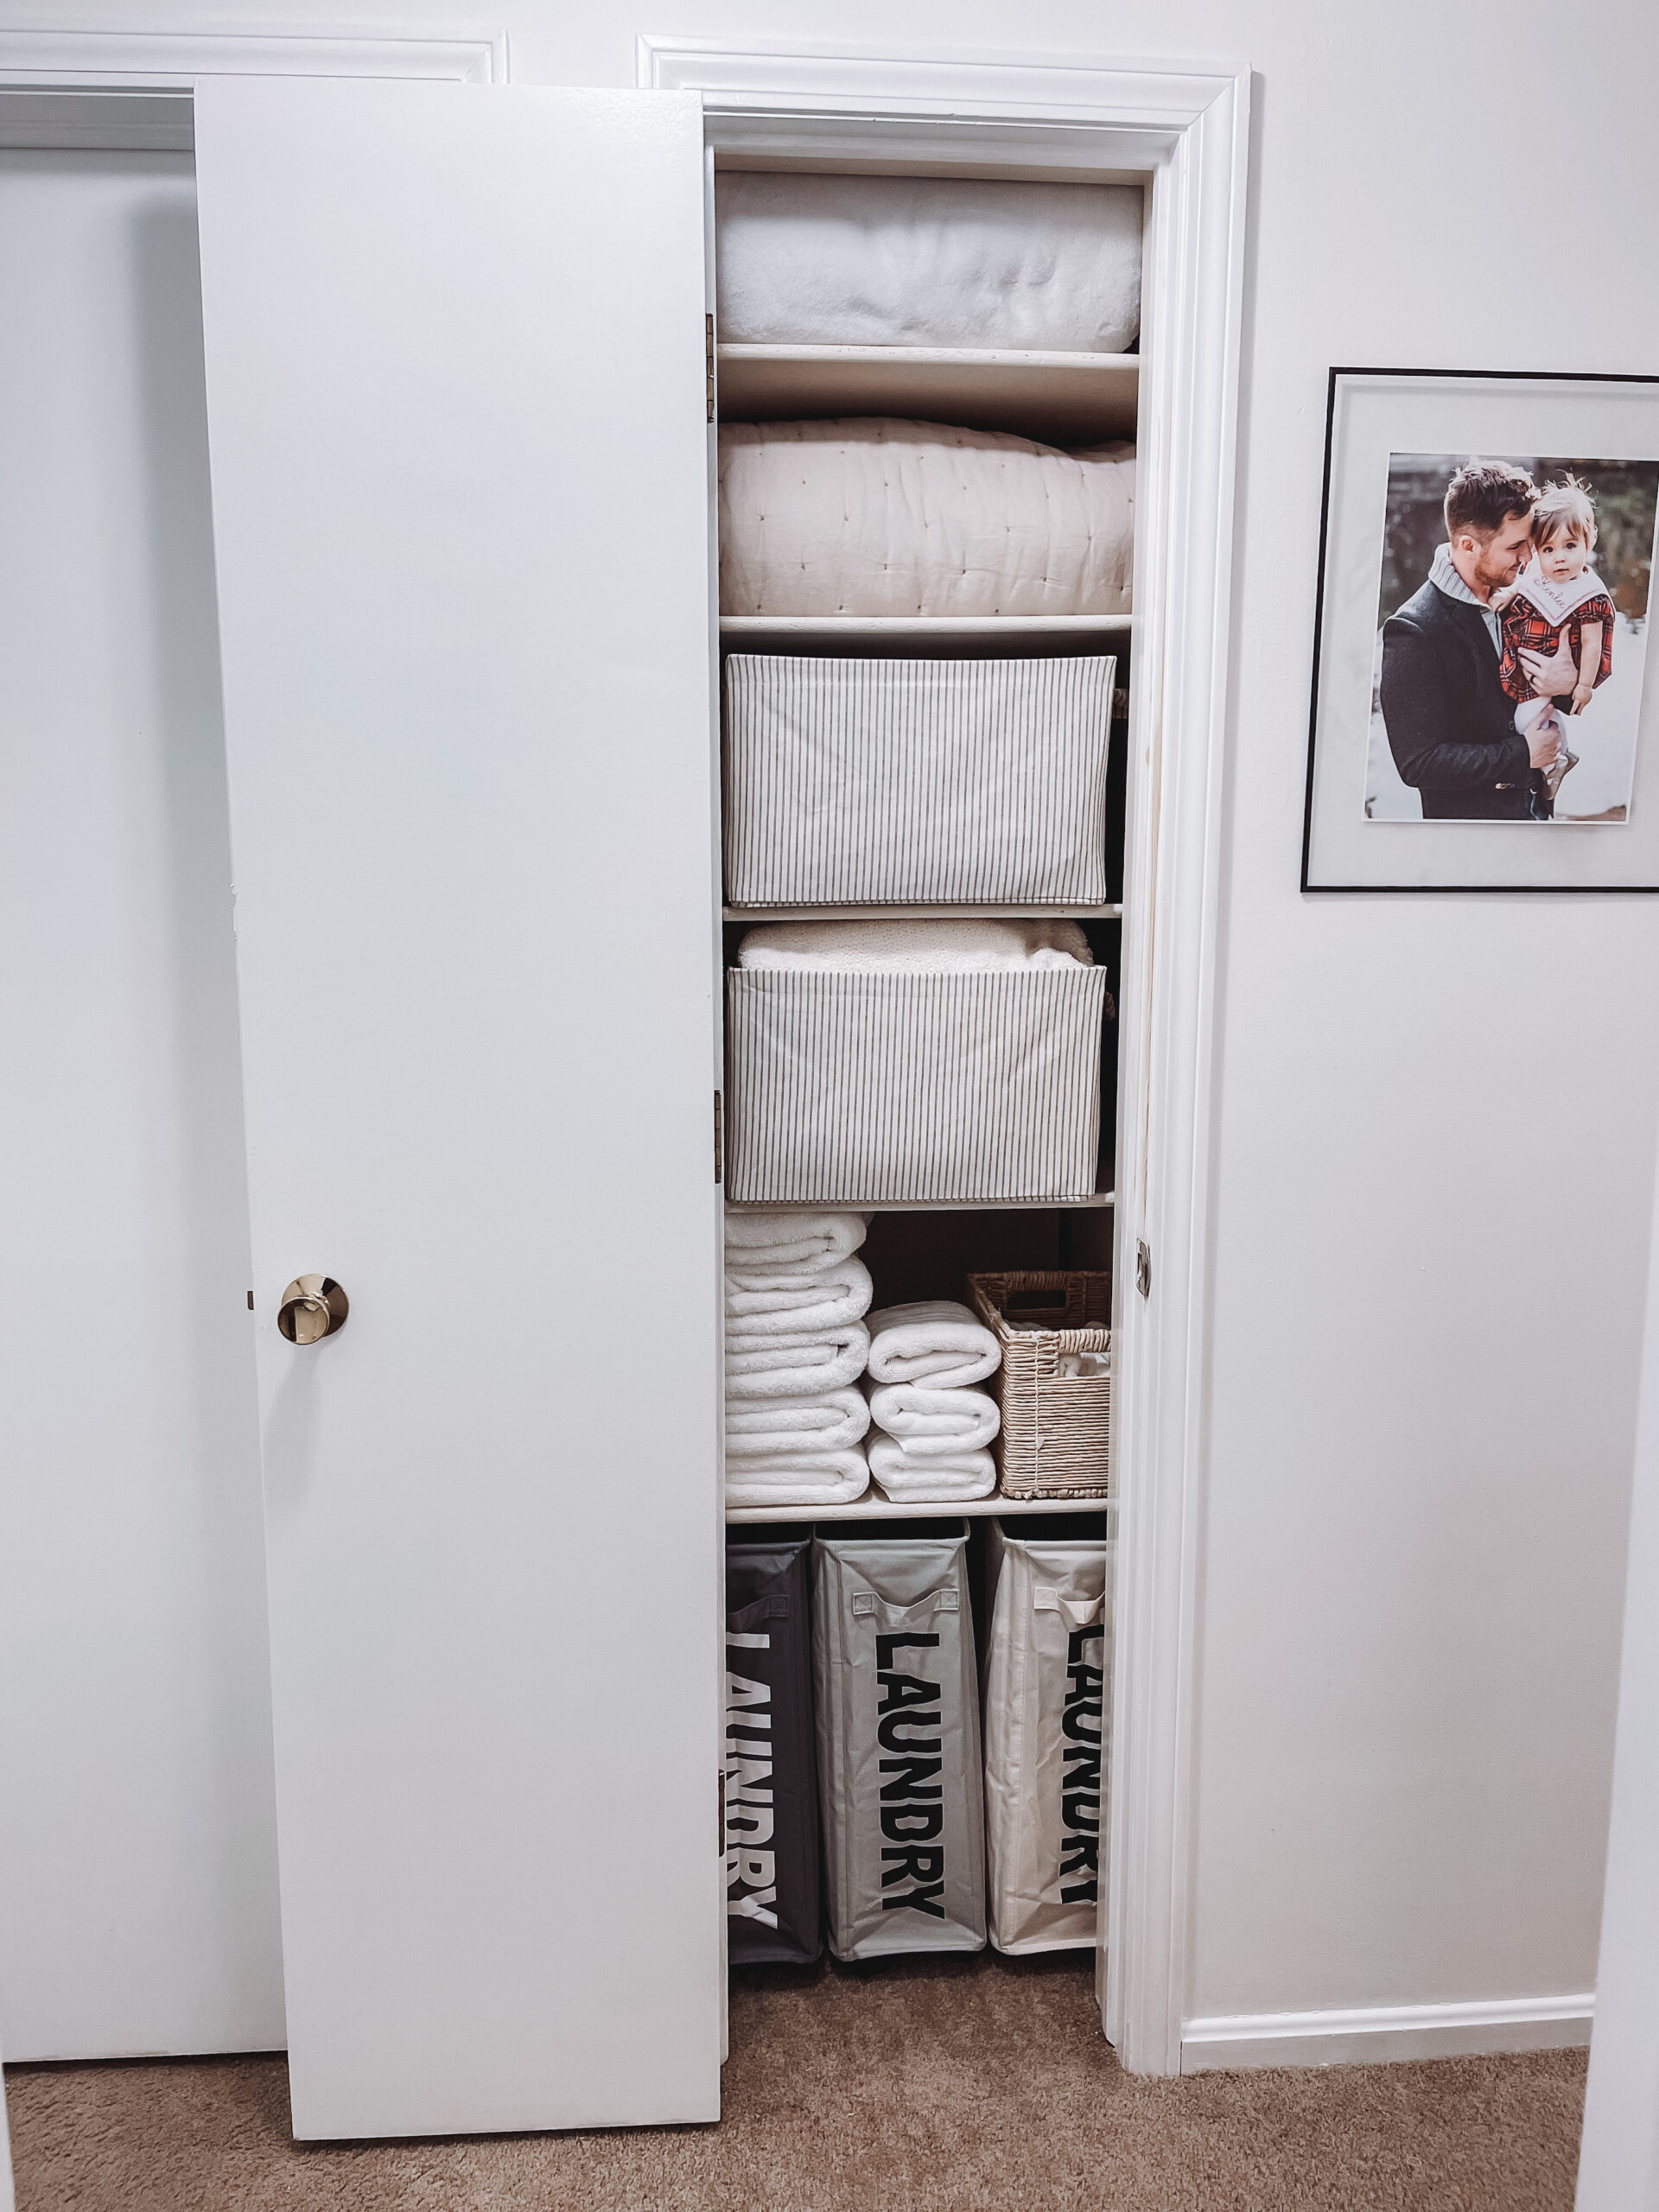 How to Organize a Bathroom Closet · Chatfield Court